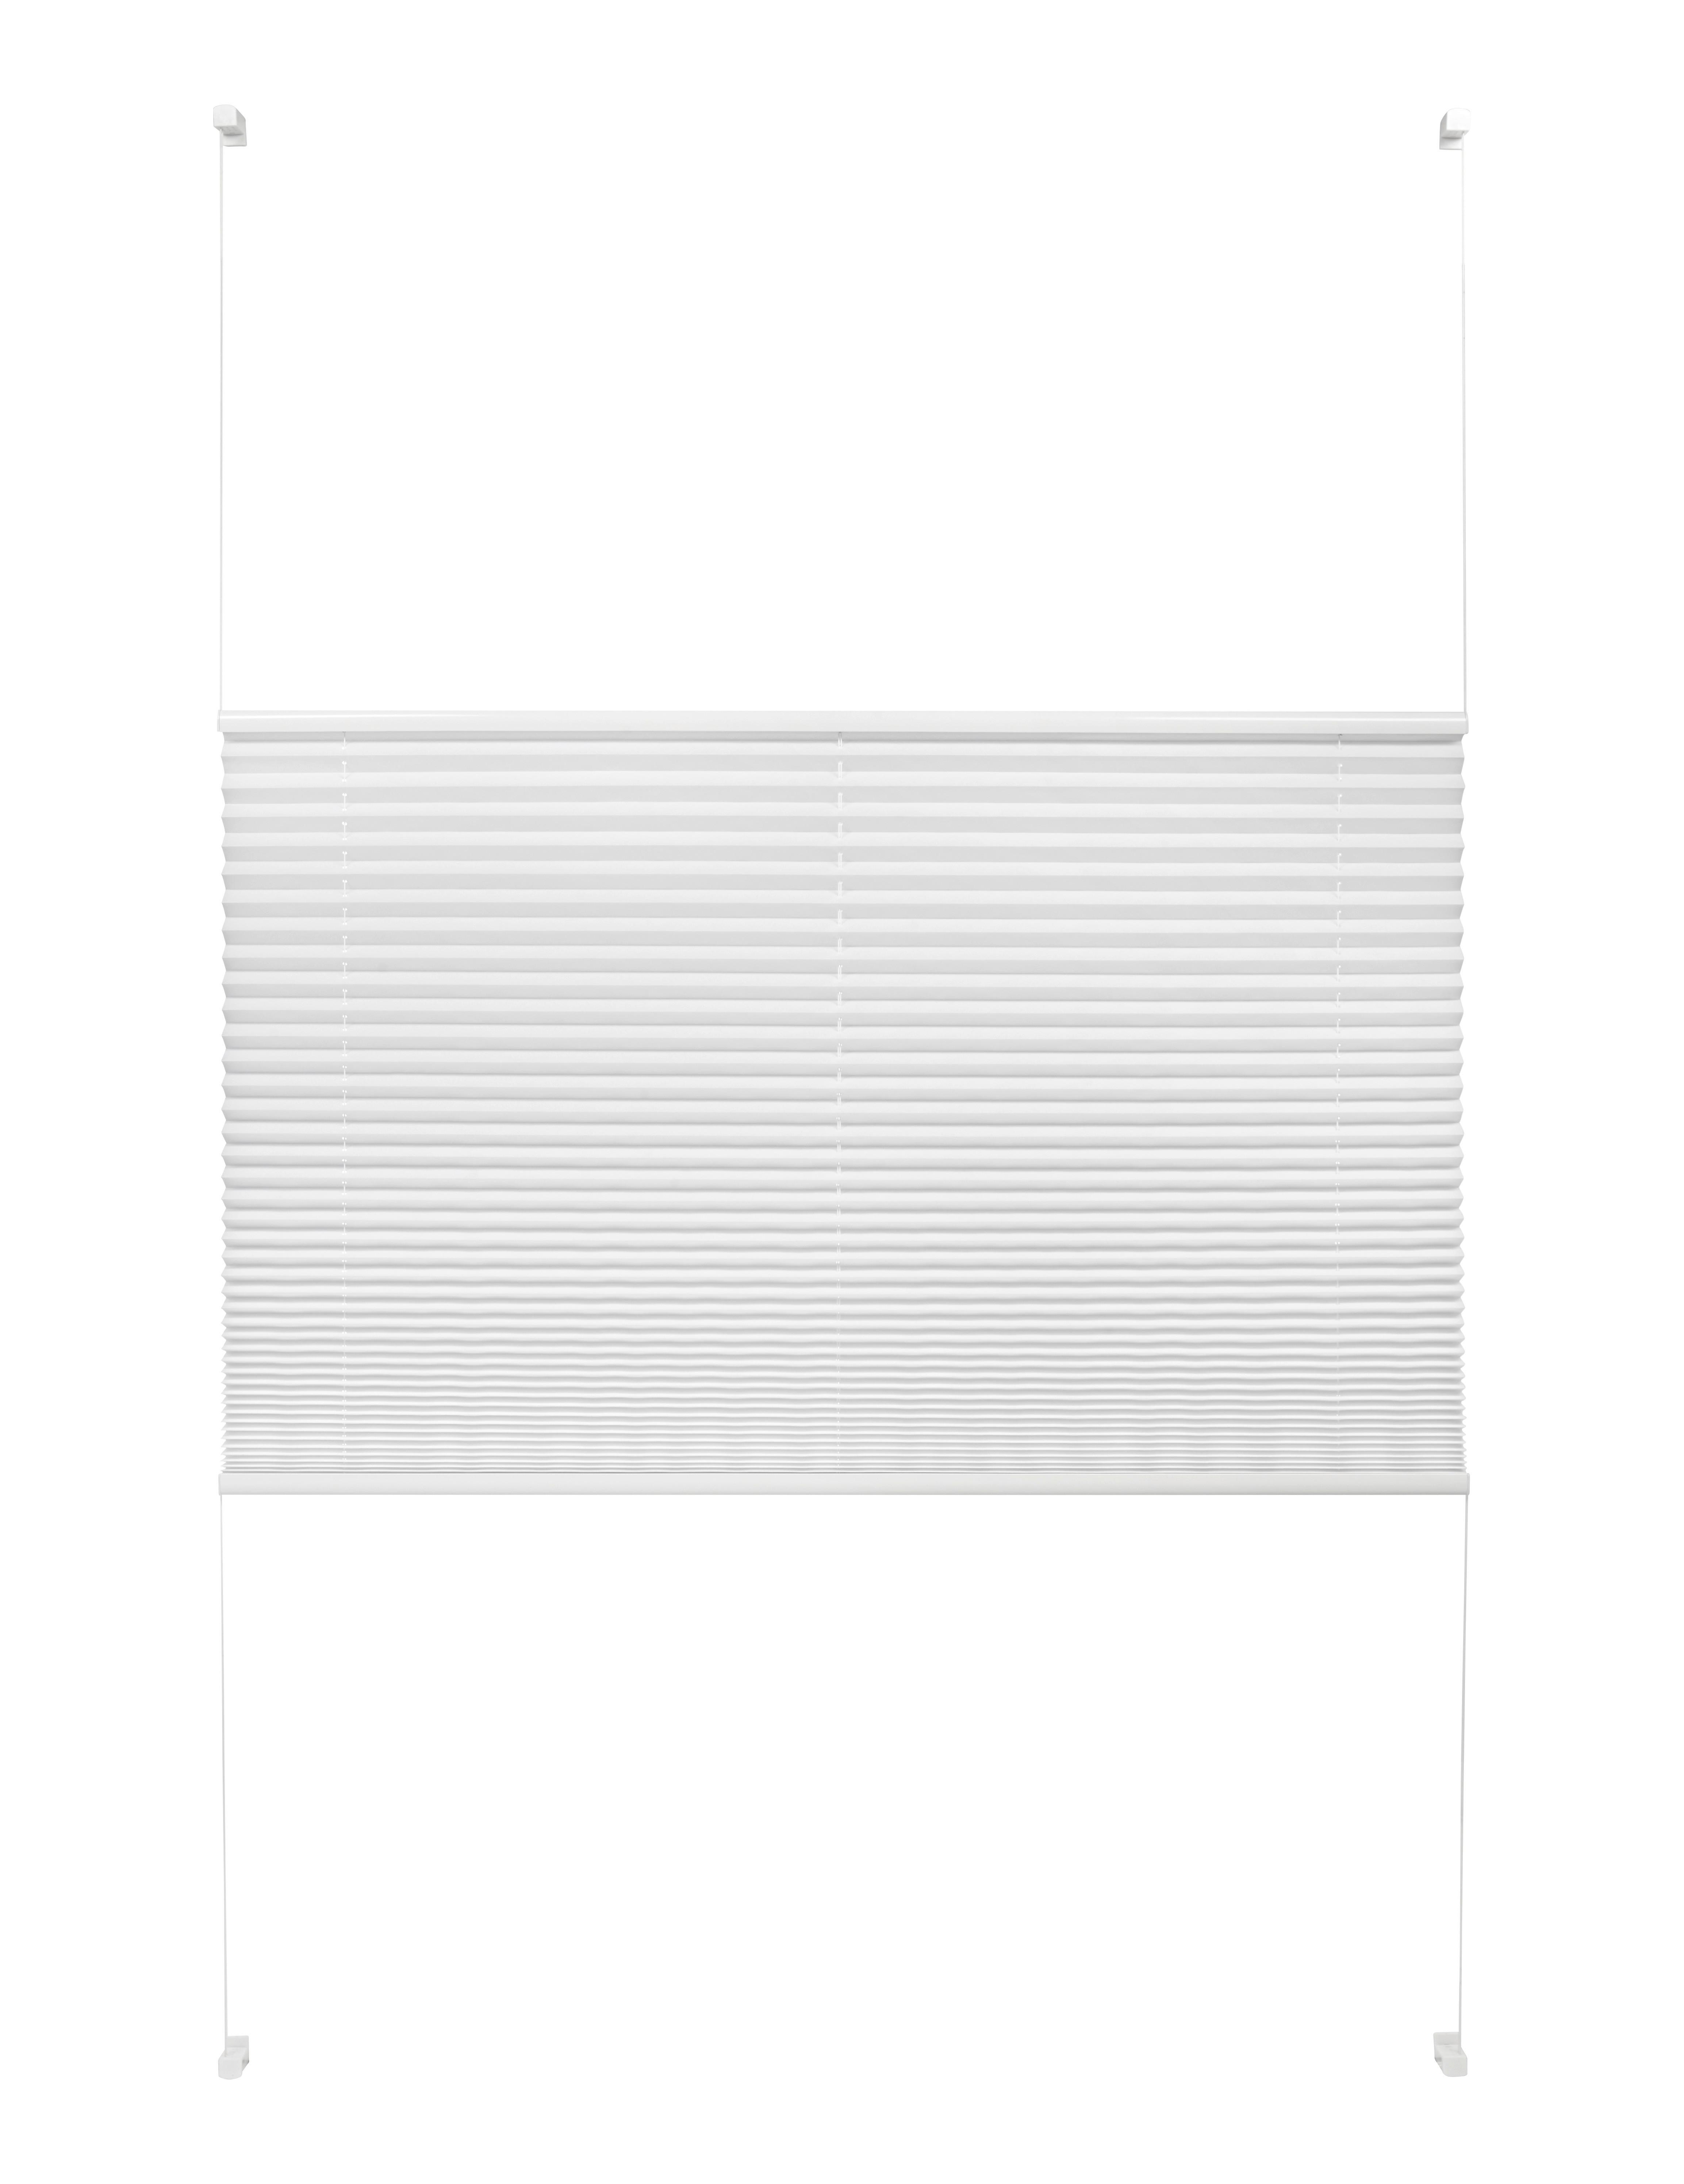 Plissee Light in Weiss ca. 100x130cm - Weiss, Textil (100/130cm) - Premium Living